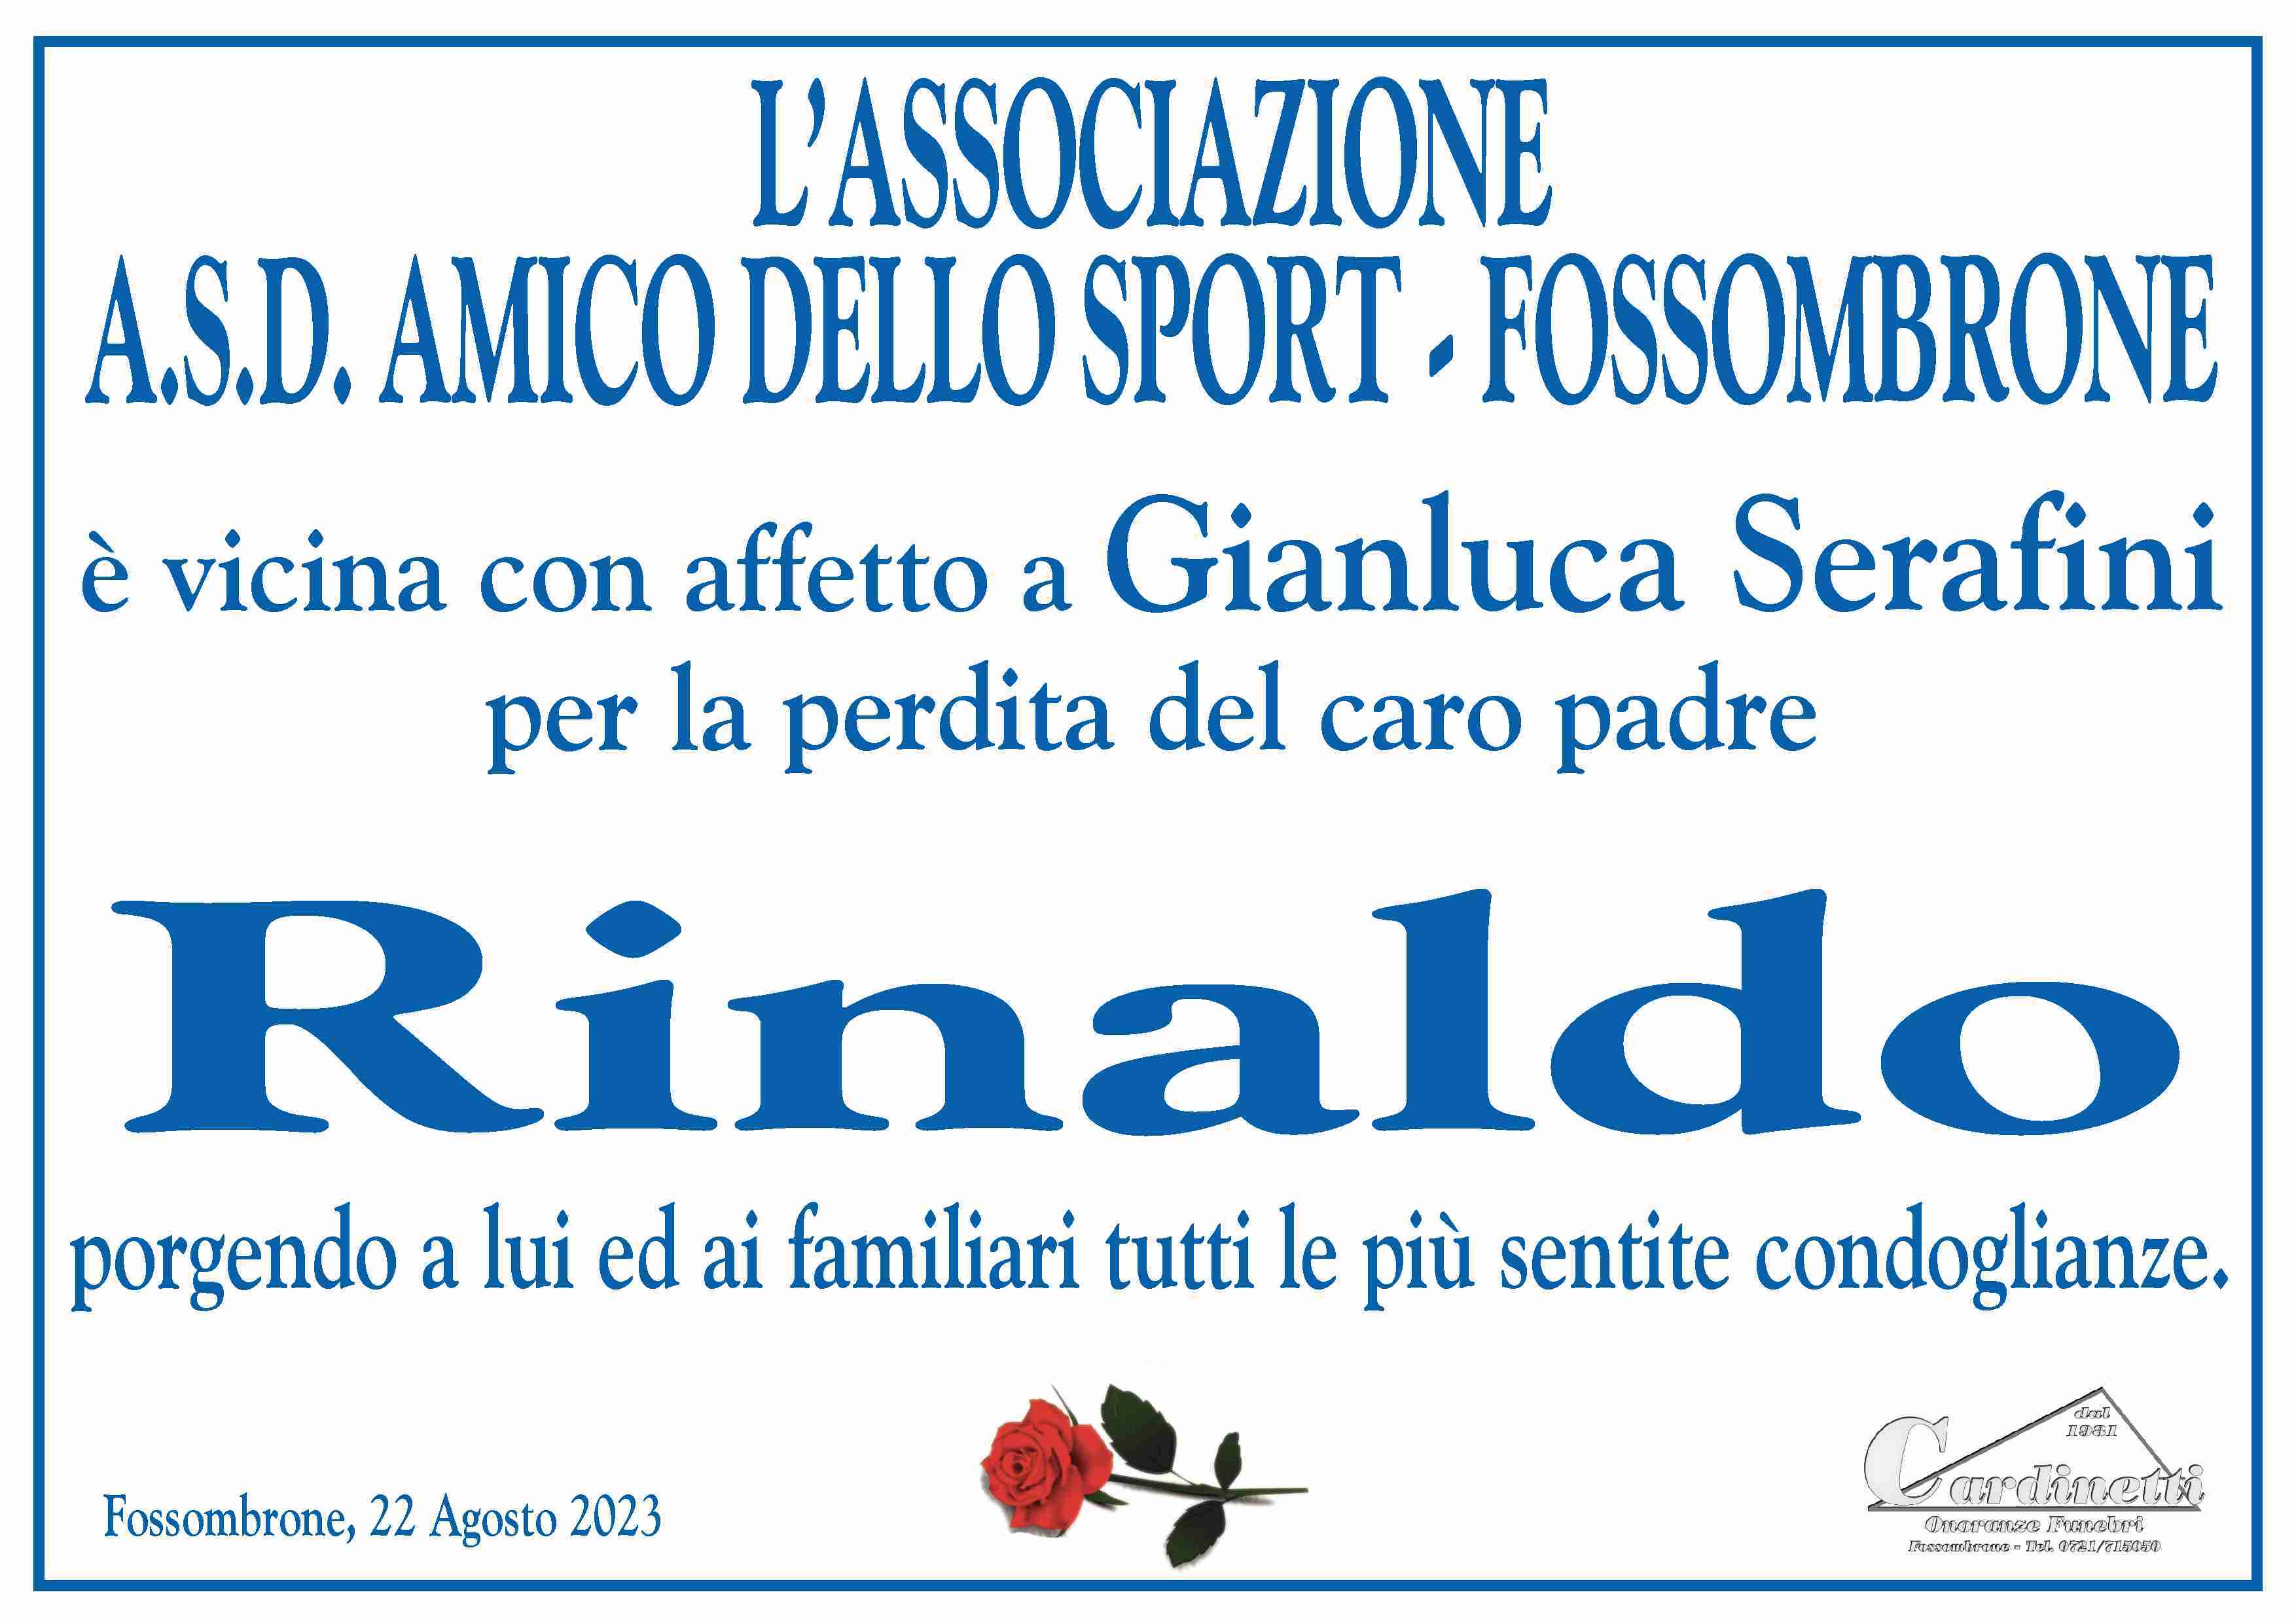 Rinaldo Serafini